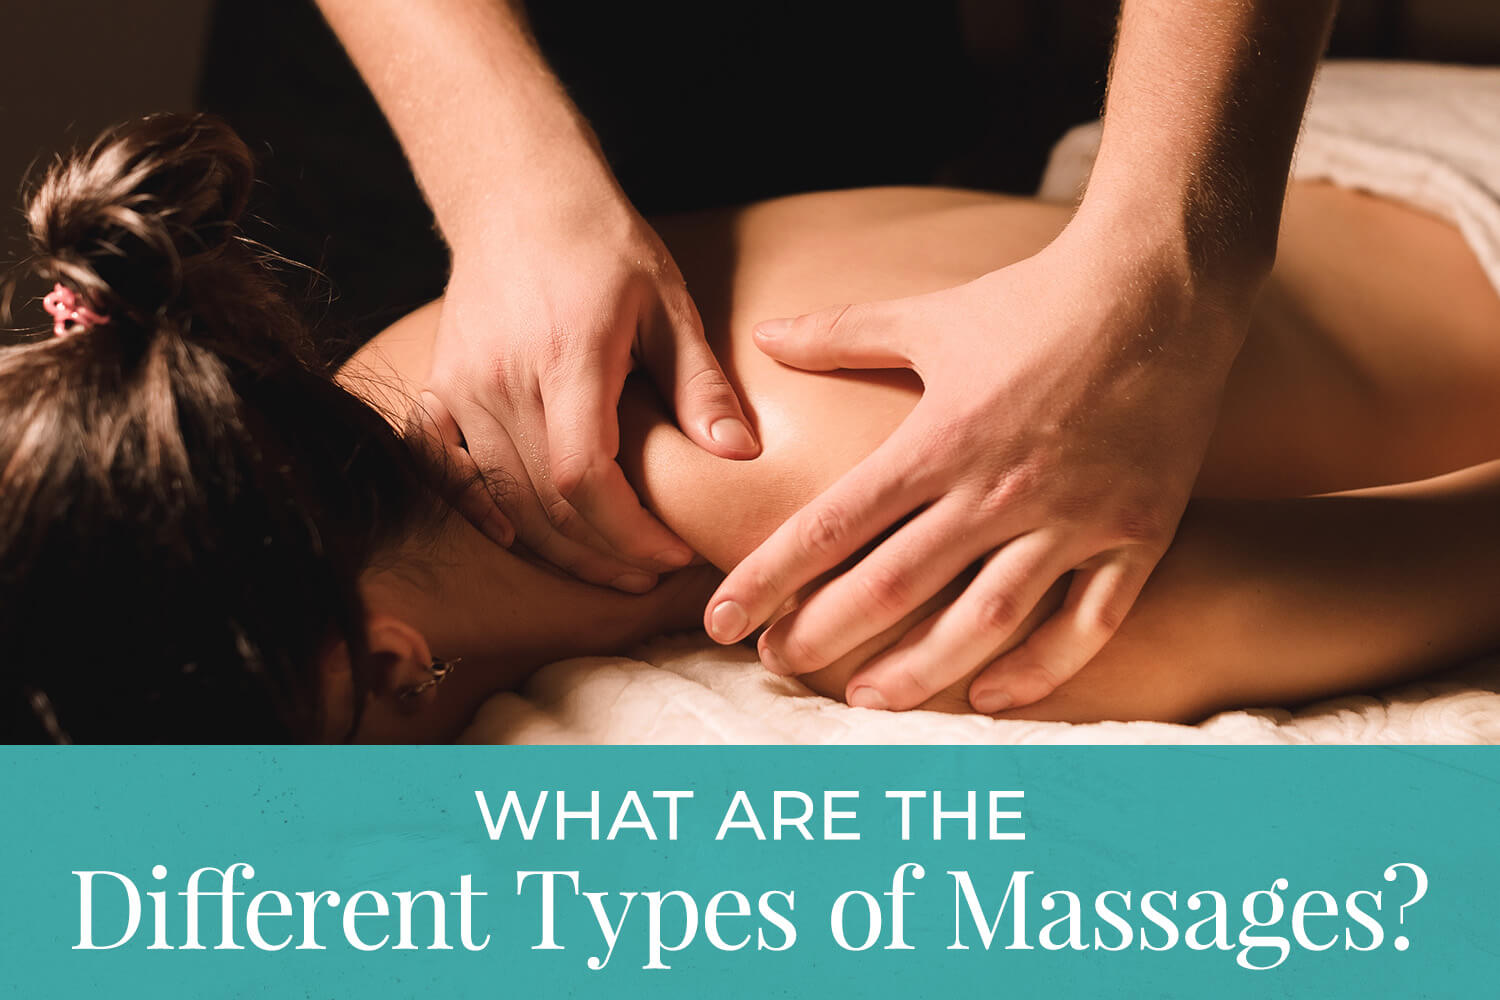 massage therapist massaging client